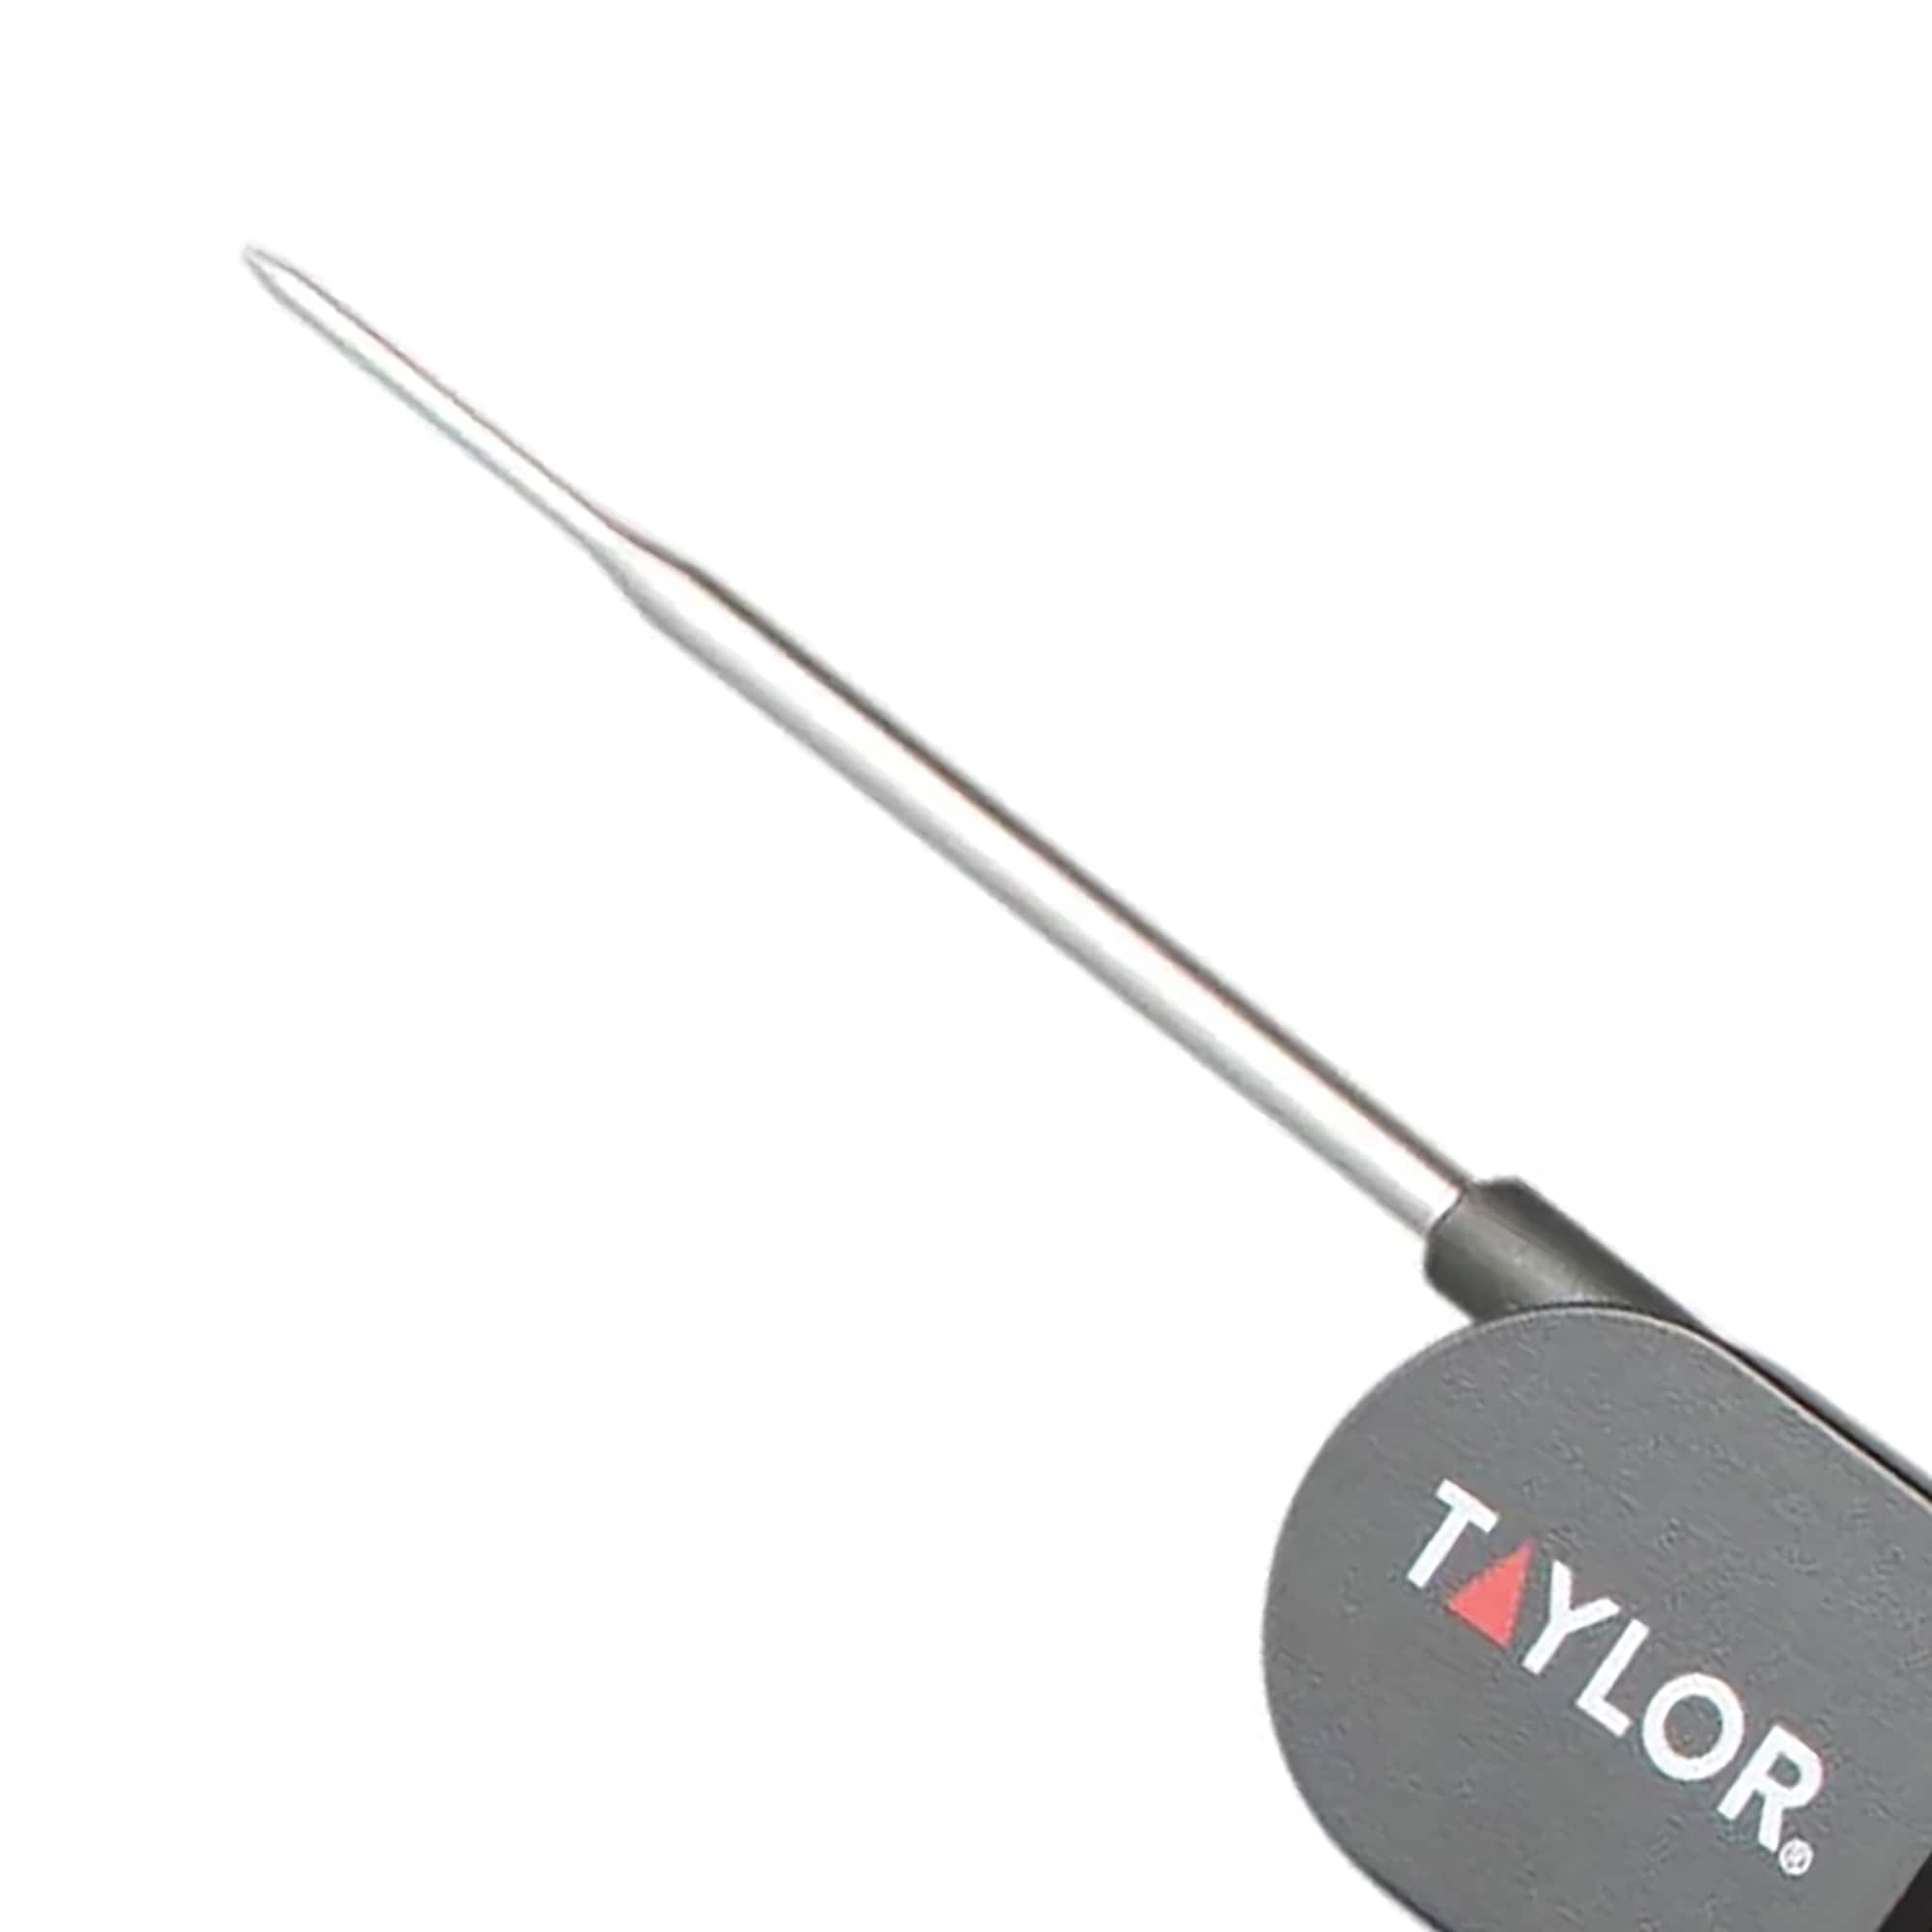 Taylor Wire Probe Digital Thermometer Plastic Black 3.15 in.